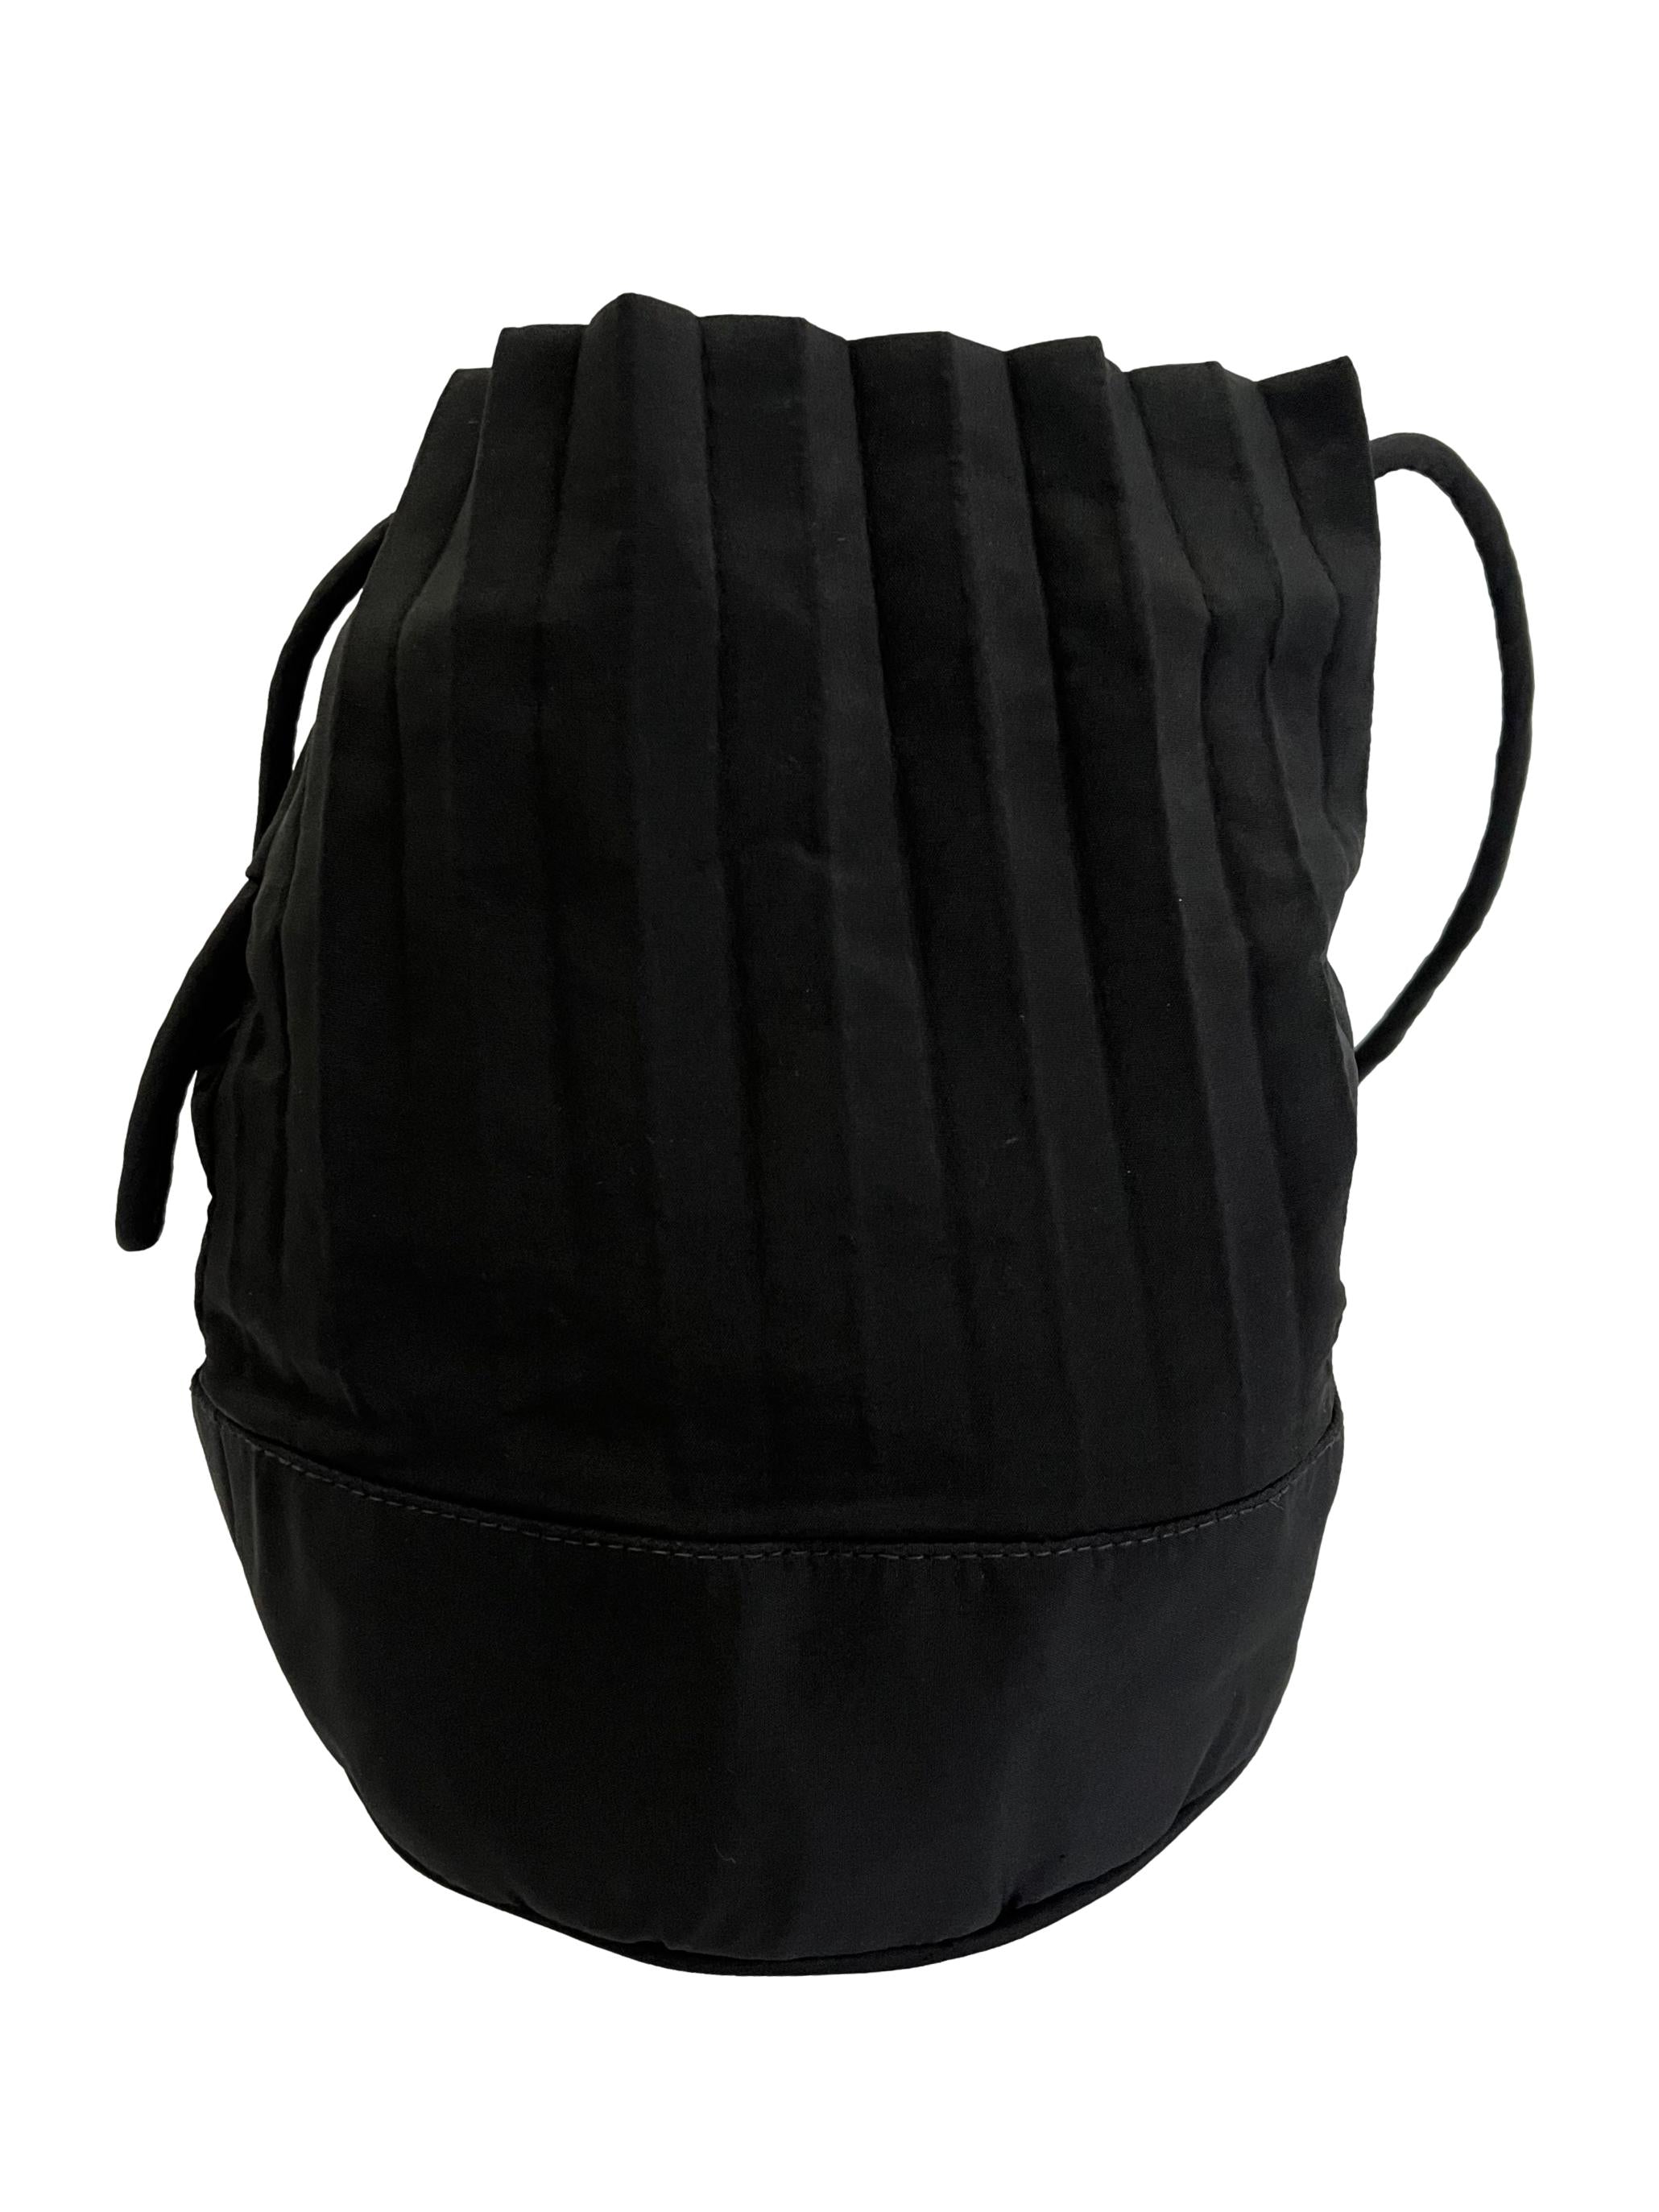 Bucket Bag In Black